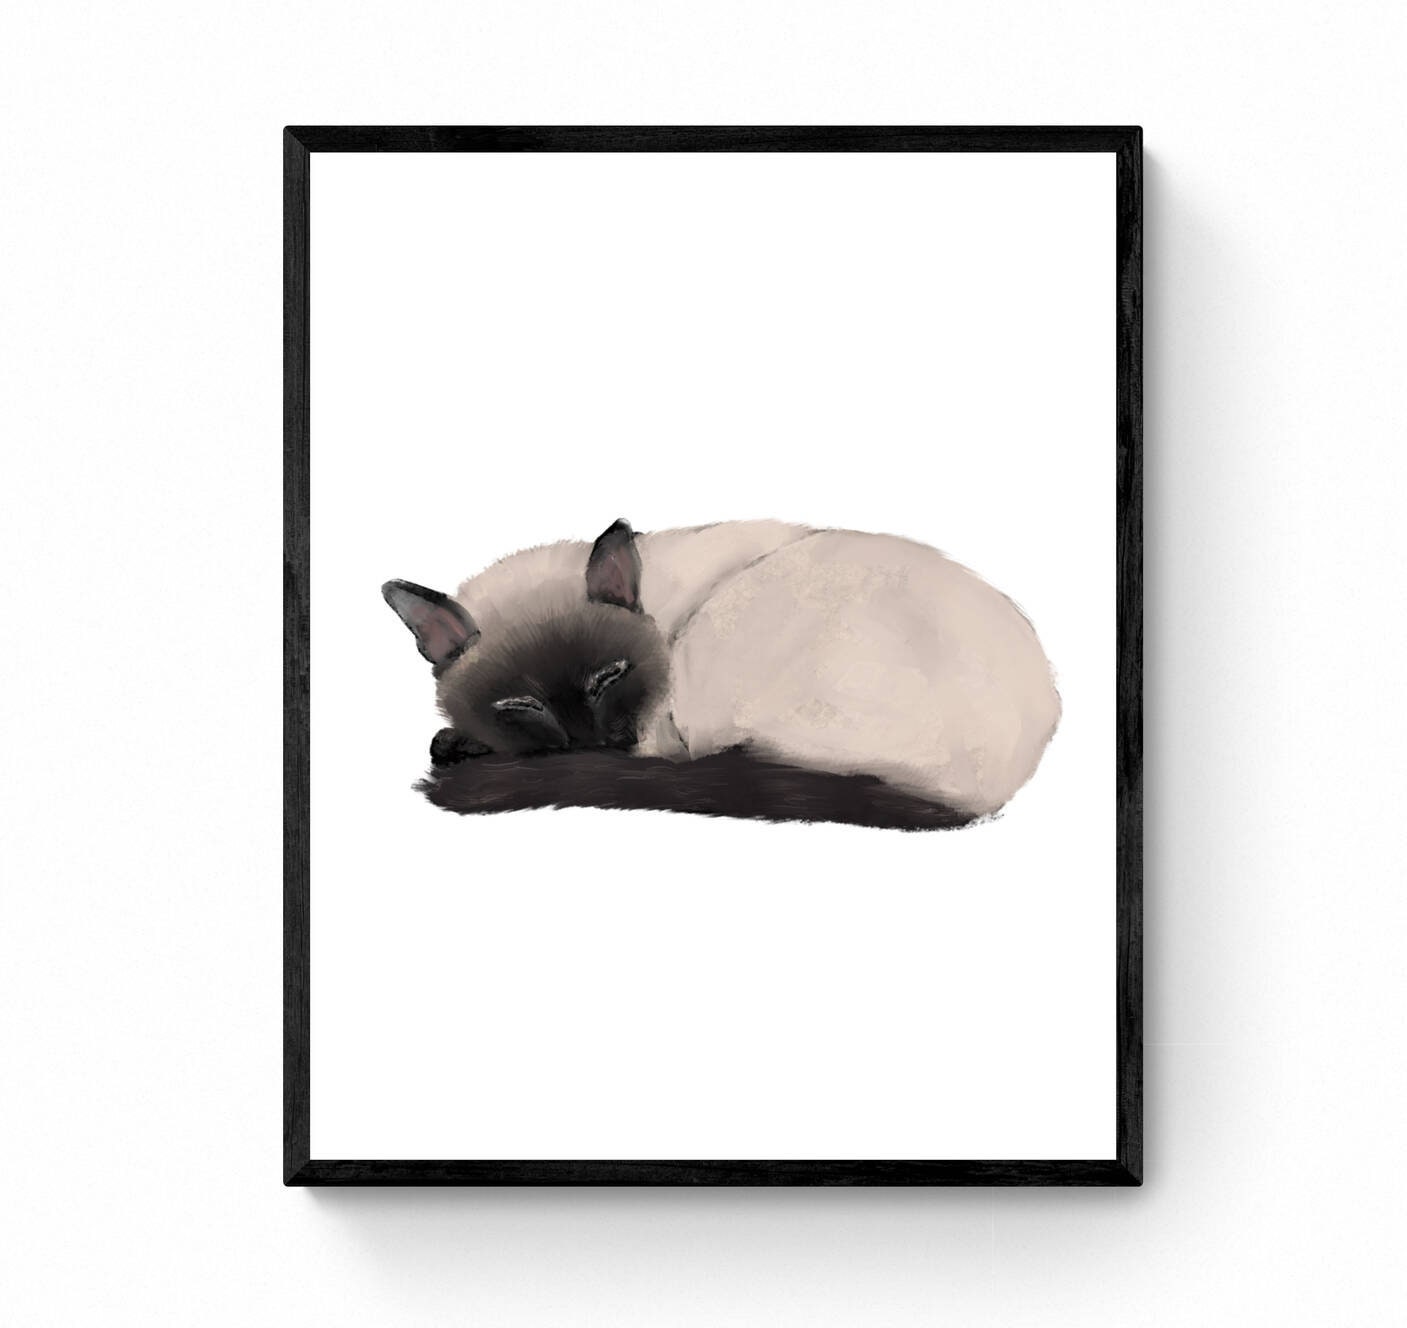 Sleeping Siamese Cat Print, Sleeping Cat Print, Sleeping Siamese Art, Cat Illustration, Home Decor, Kitten Painting, Cat Lover Gift